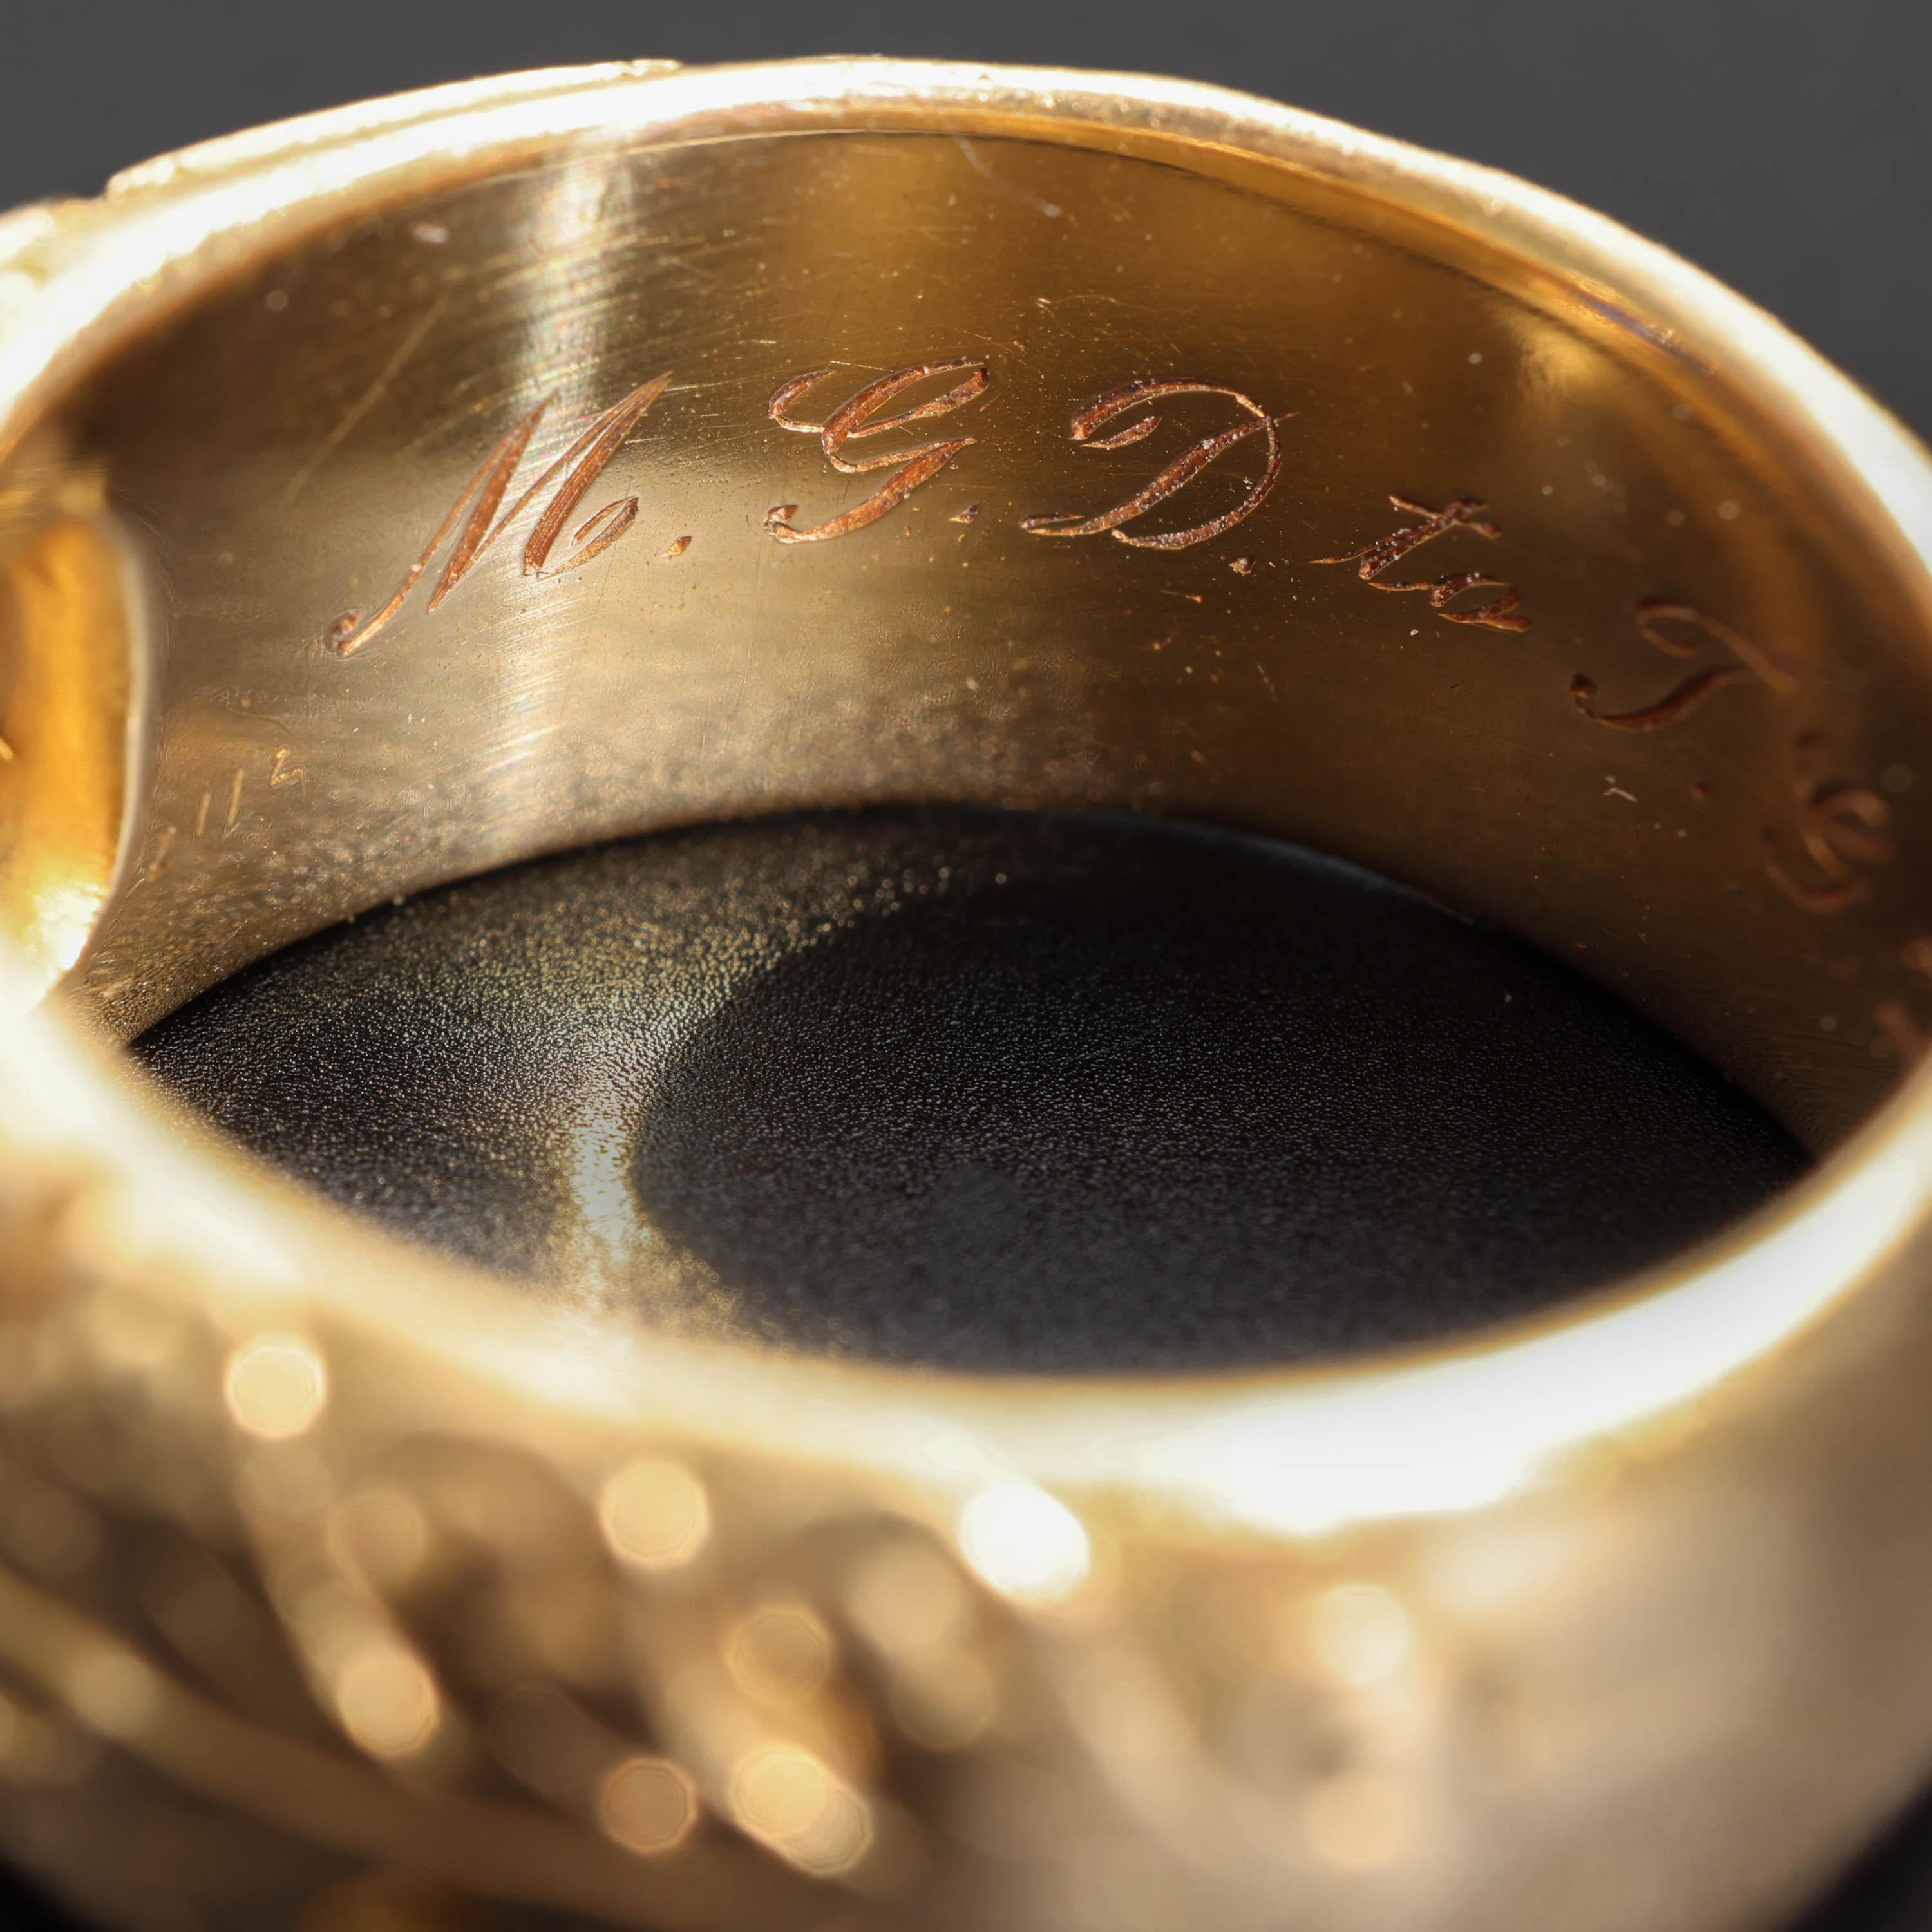 Tiffany & Co. Kashmir Sapphire Ring Edwardian AGL Certified Untreated 4